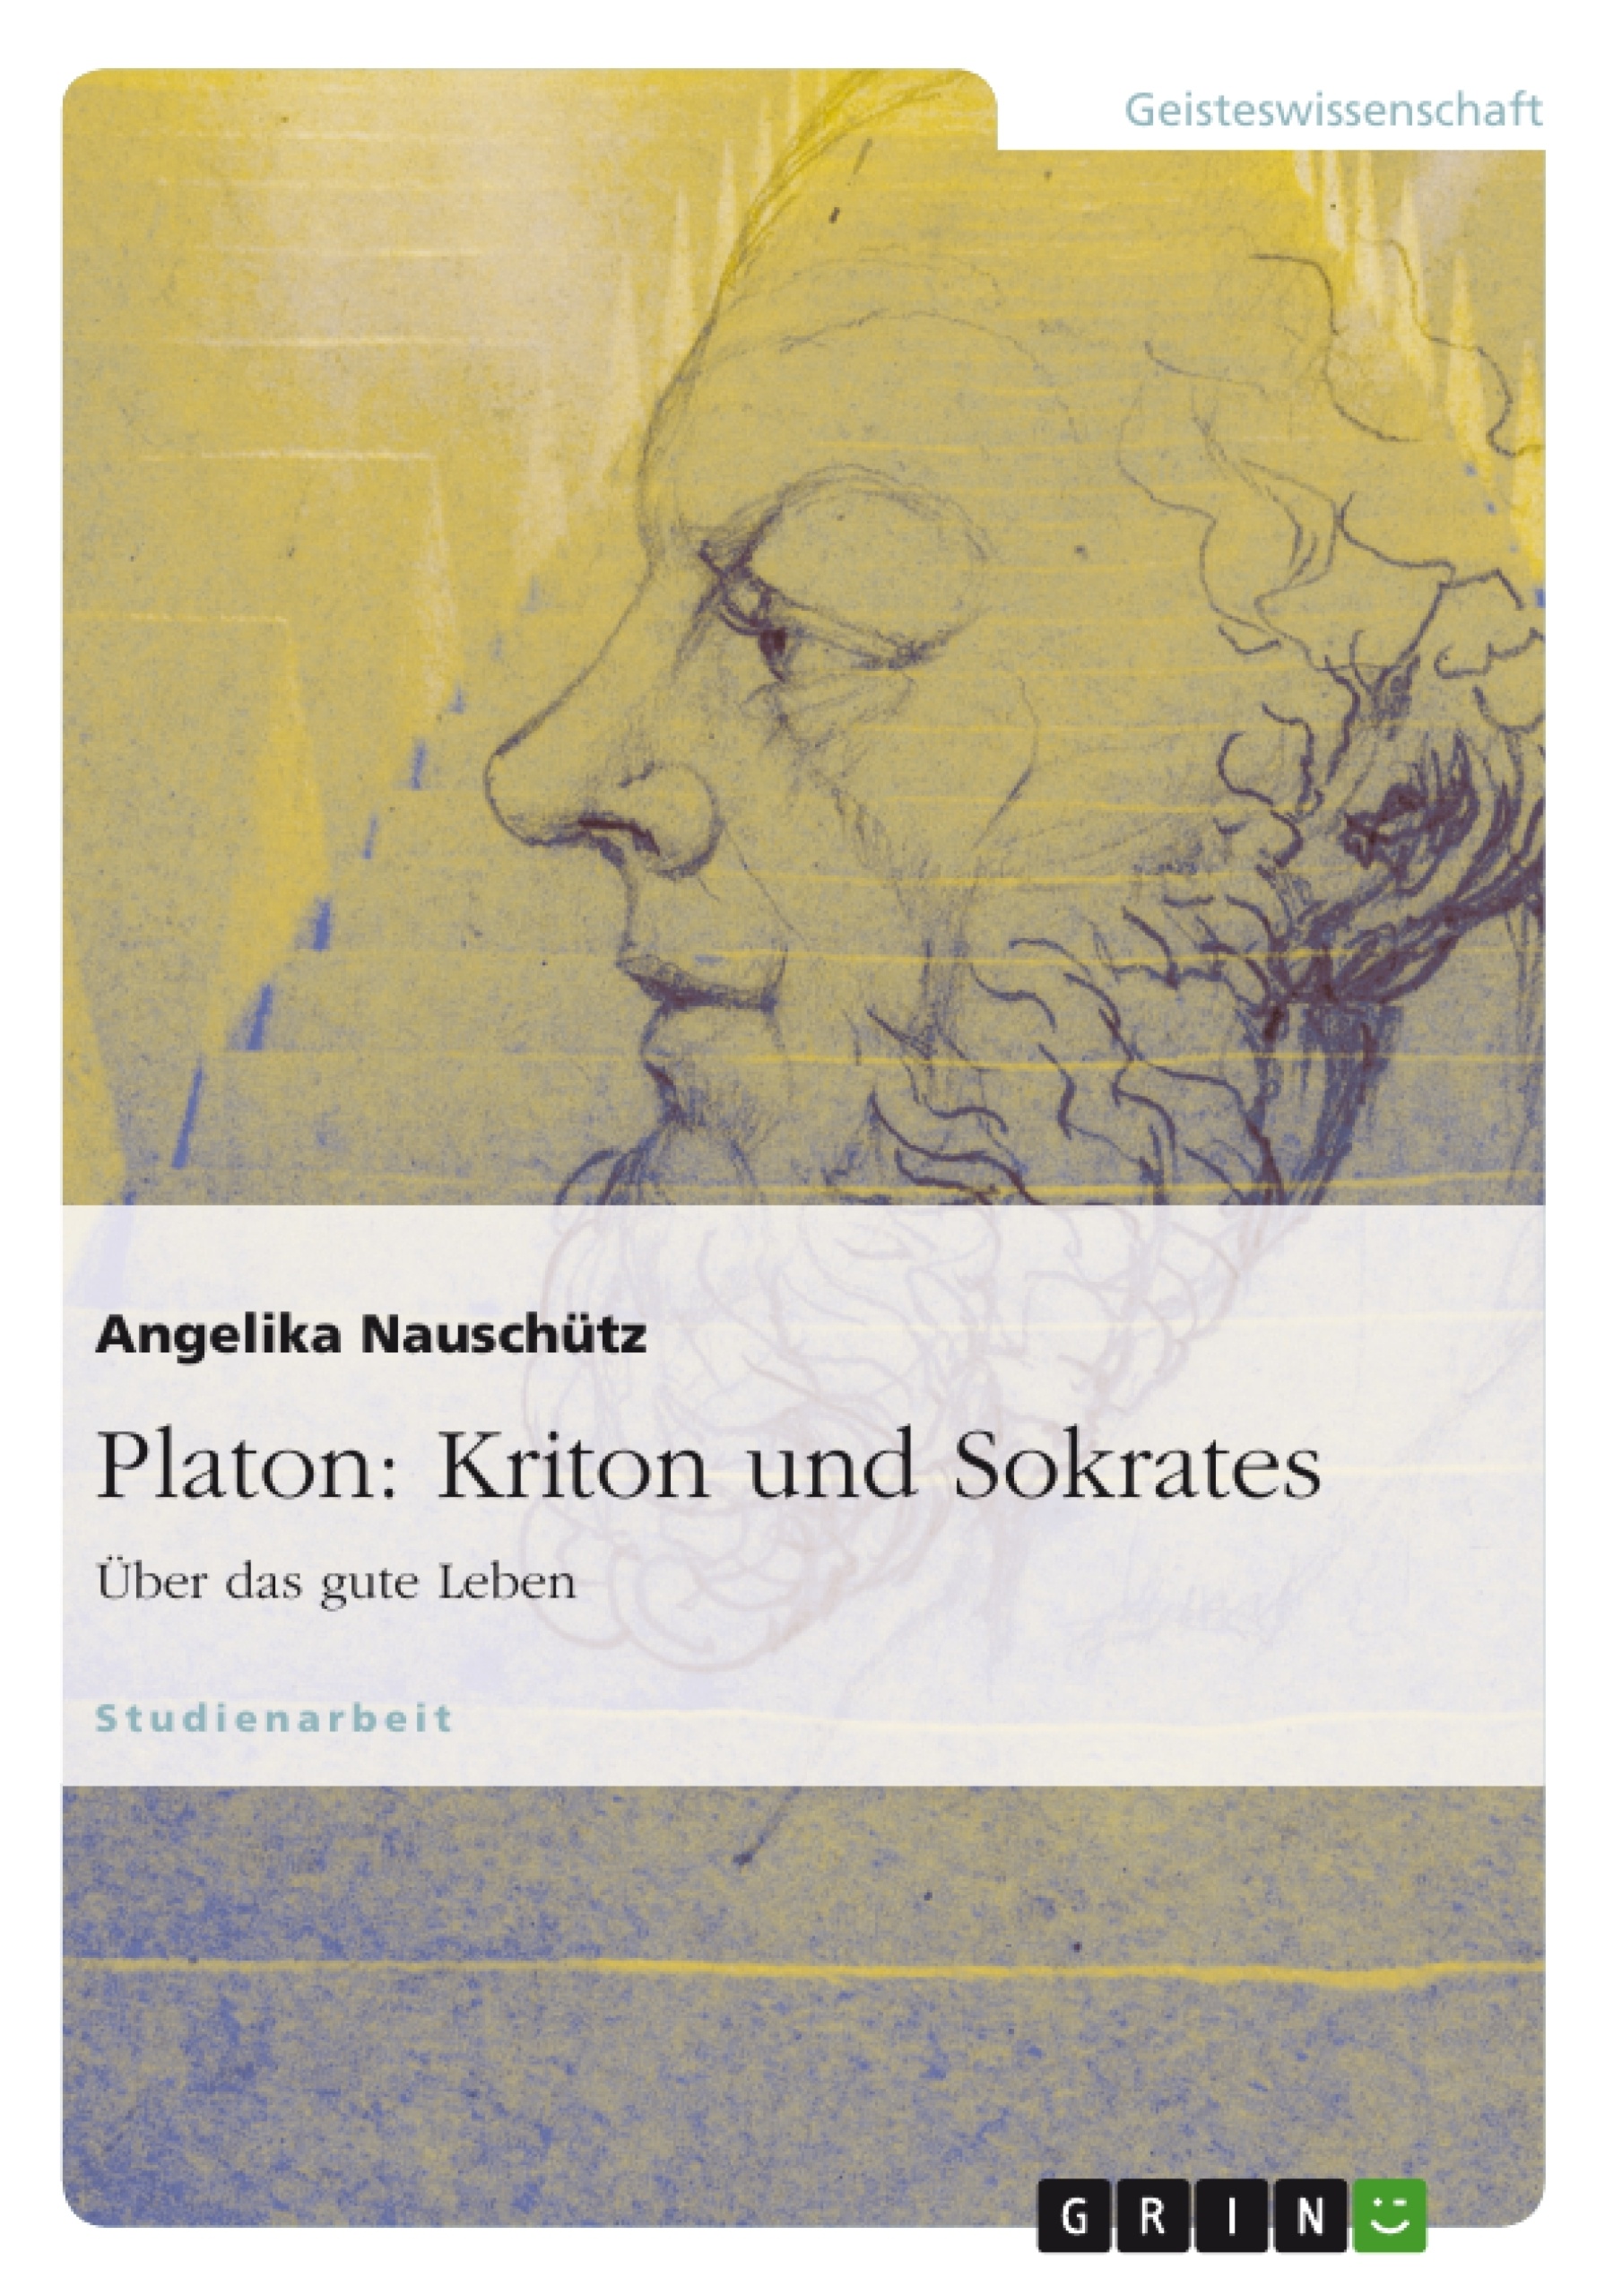 Title: Platon: Kriton und Sokrates